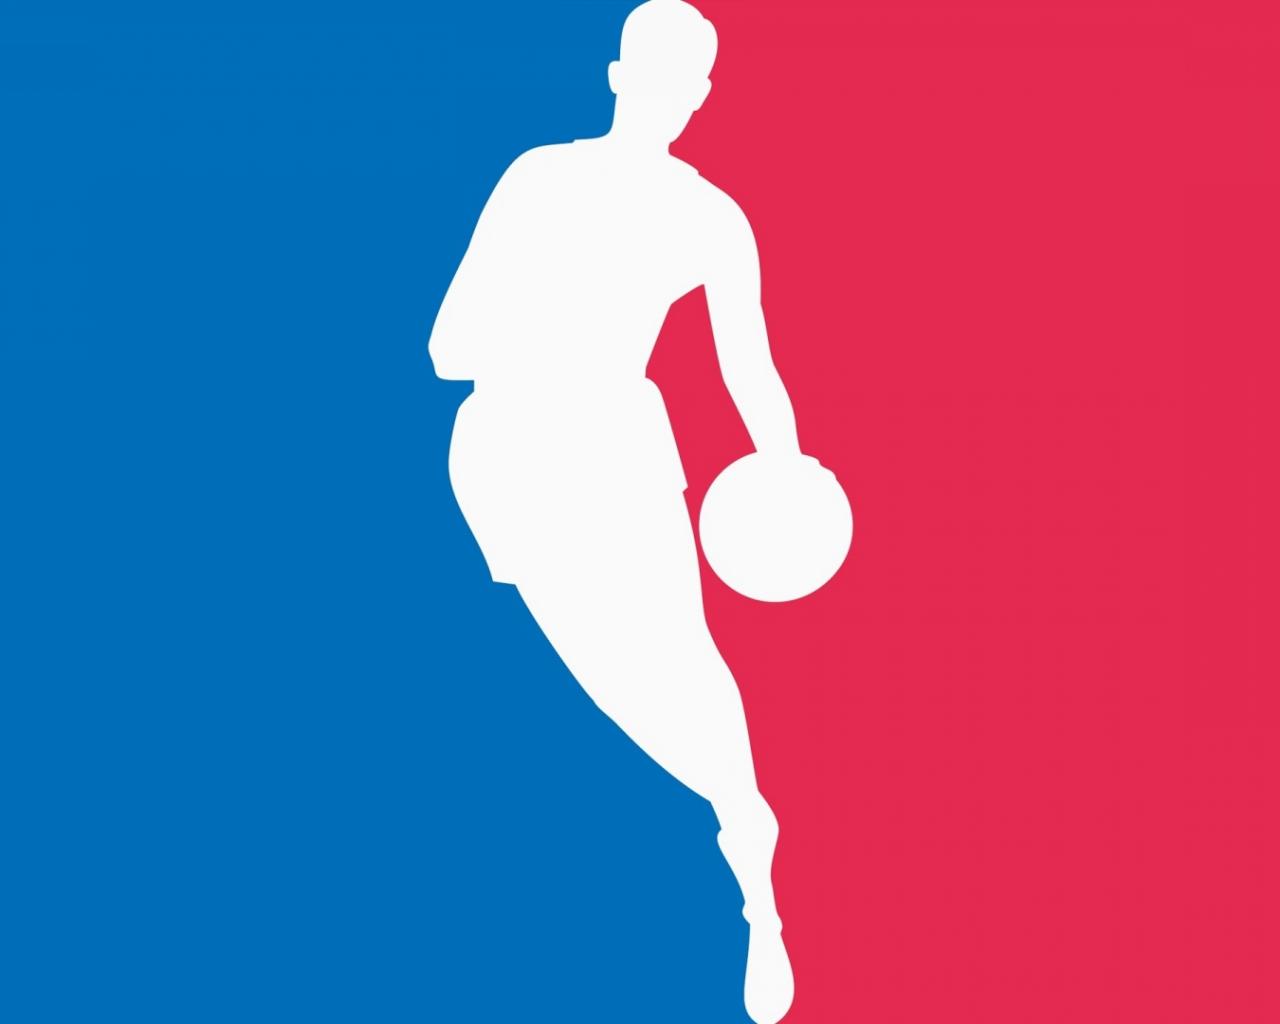 NBA Logo Backgrounds